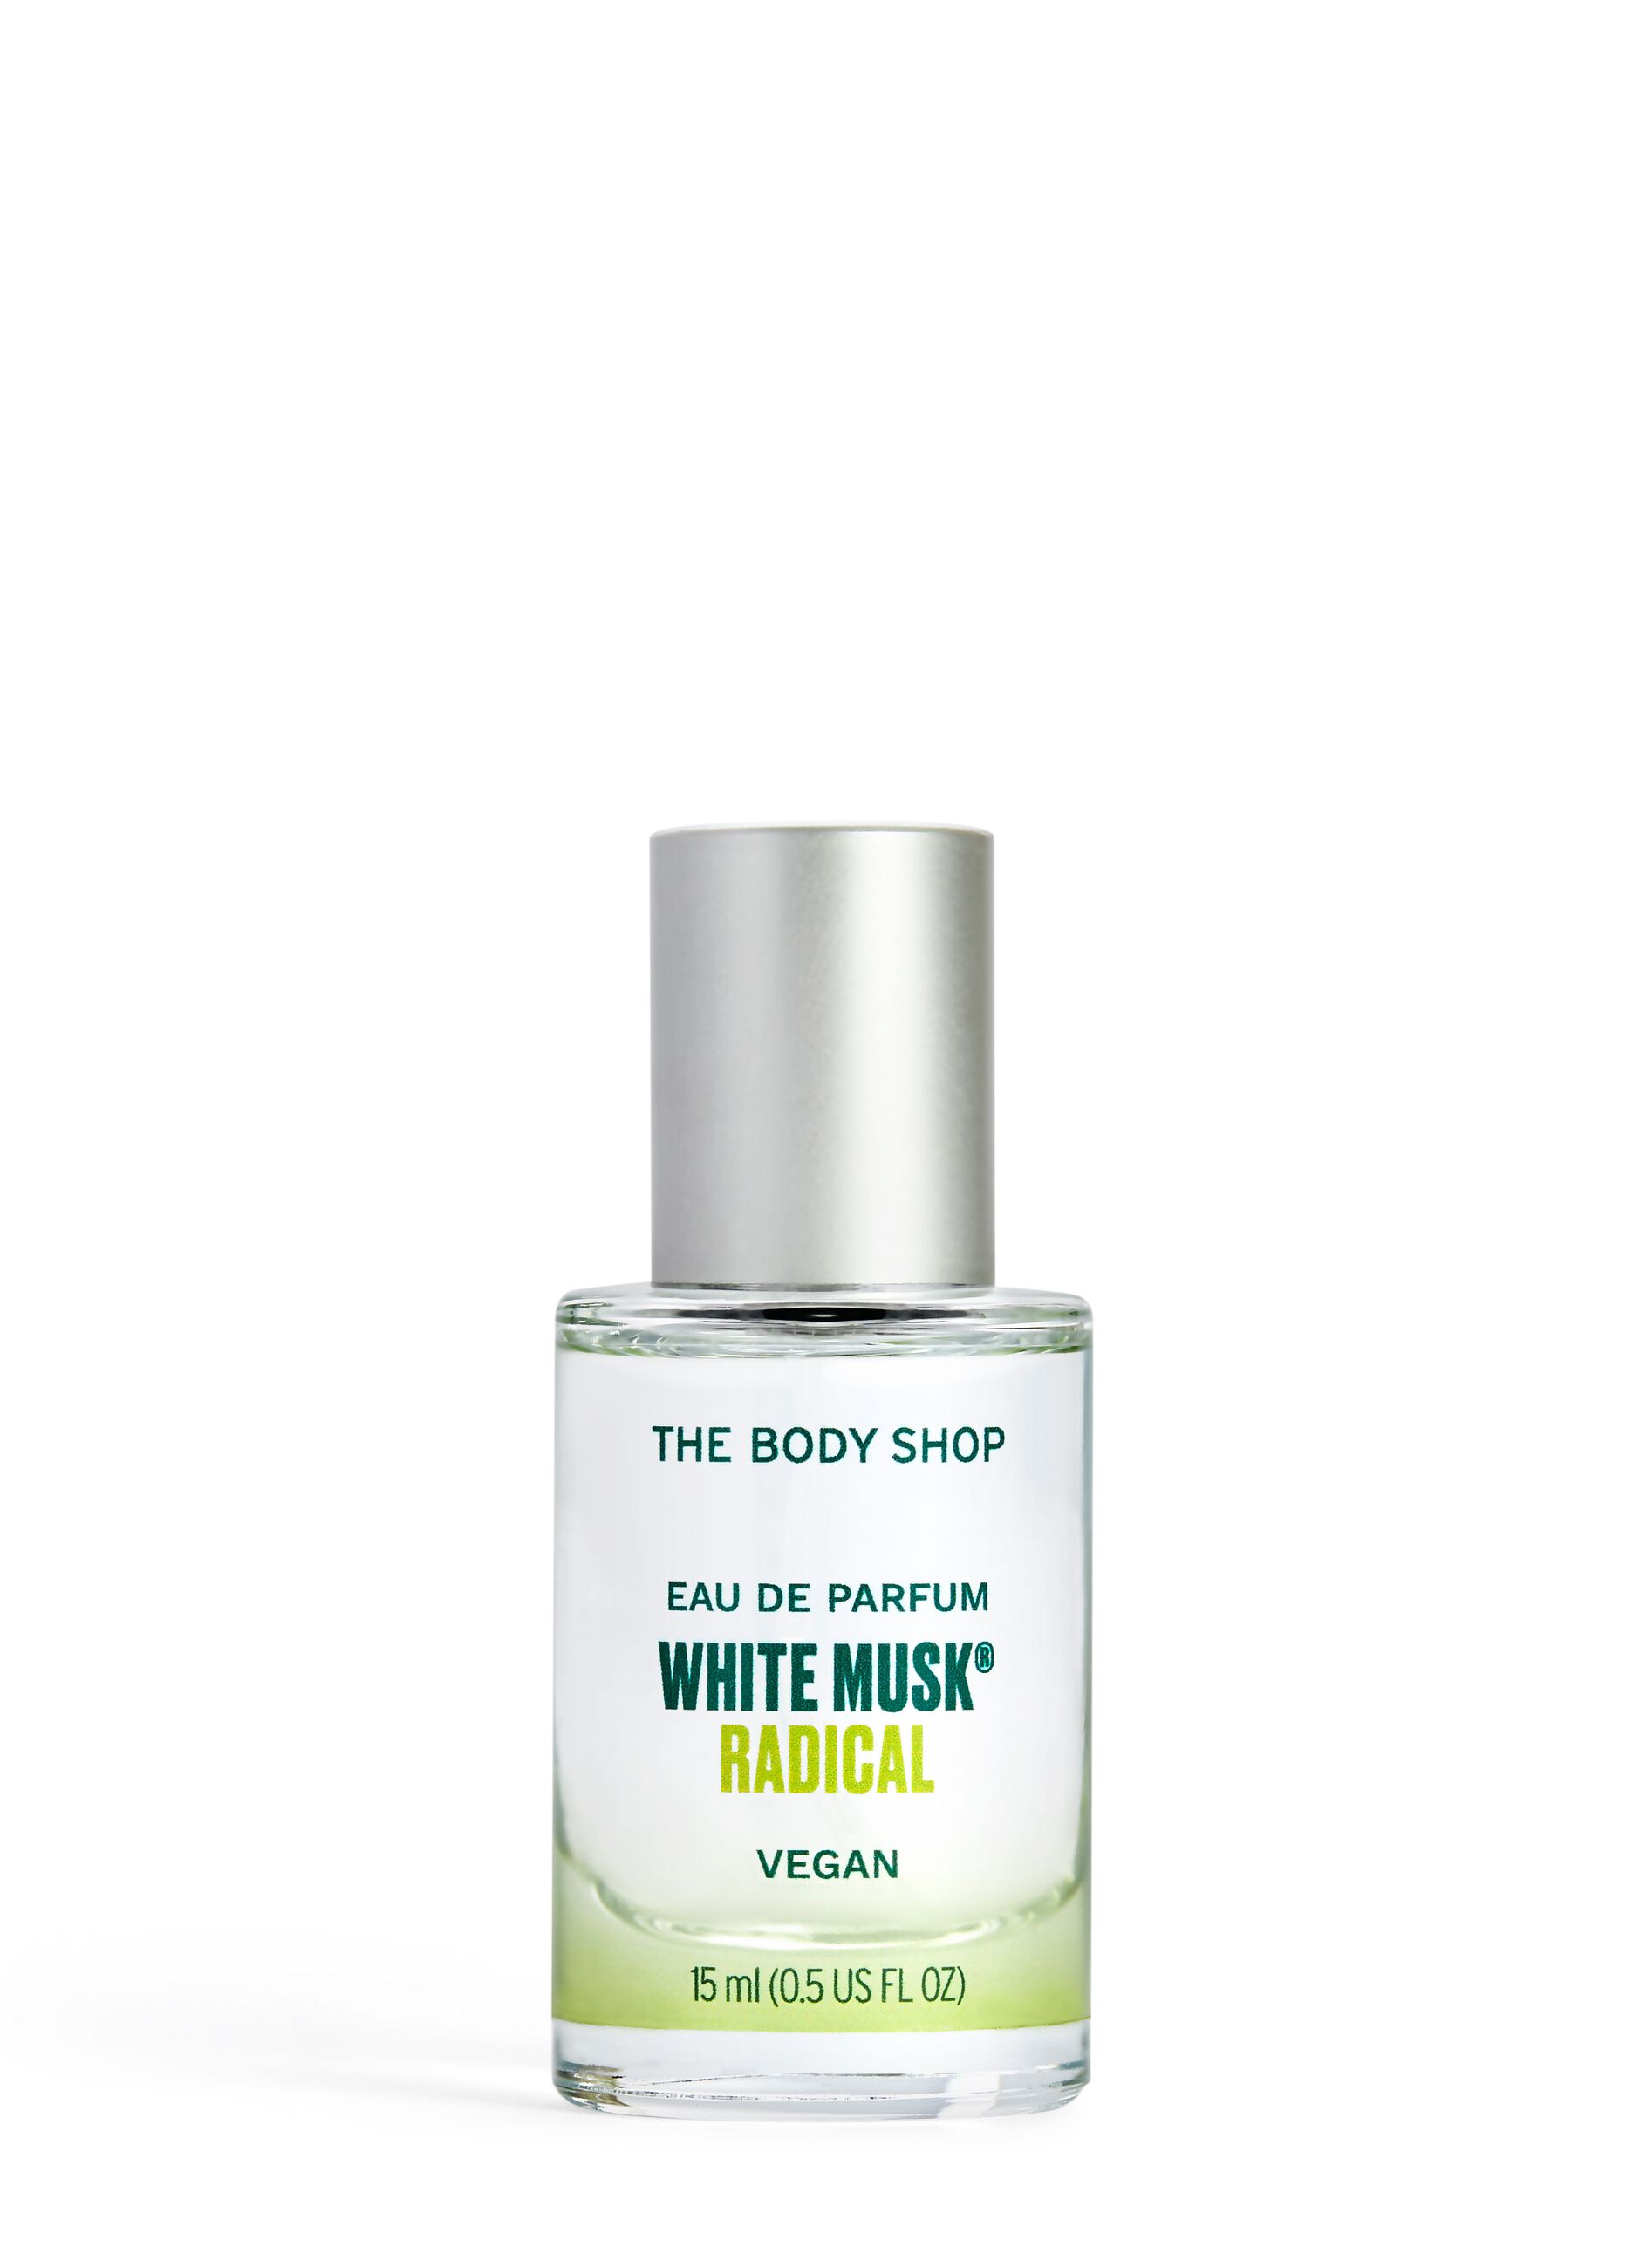 Agua de perfume White Musk® Radical 15ml The Body Shop